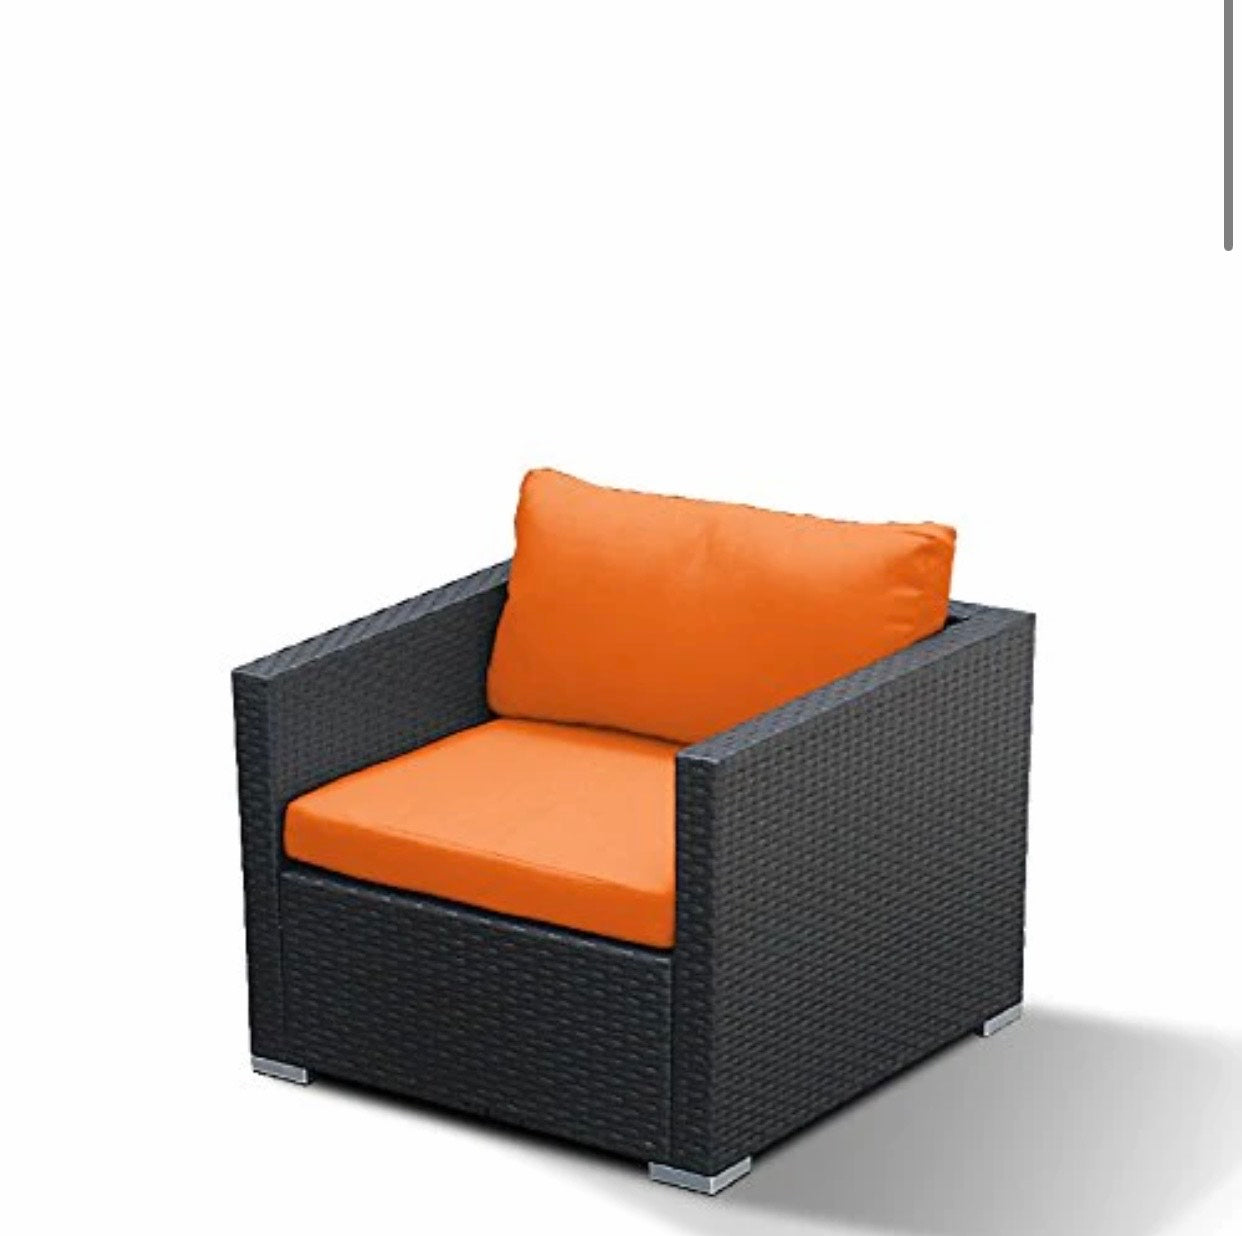 Orange Club Chair Outdoor Patio Furniture Espresso Brown Wicker